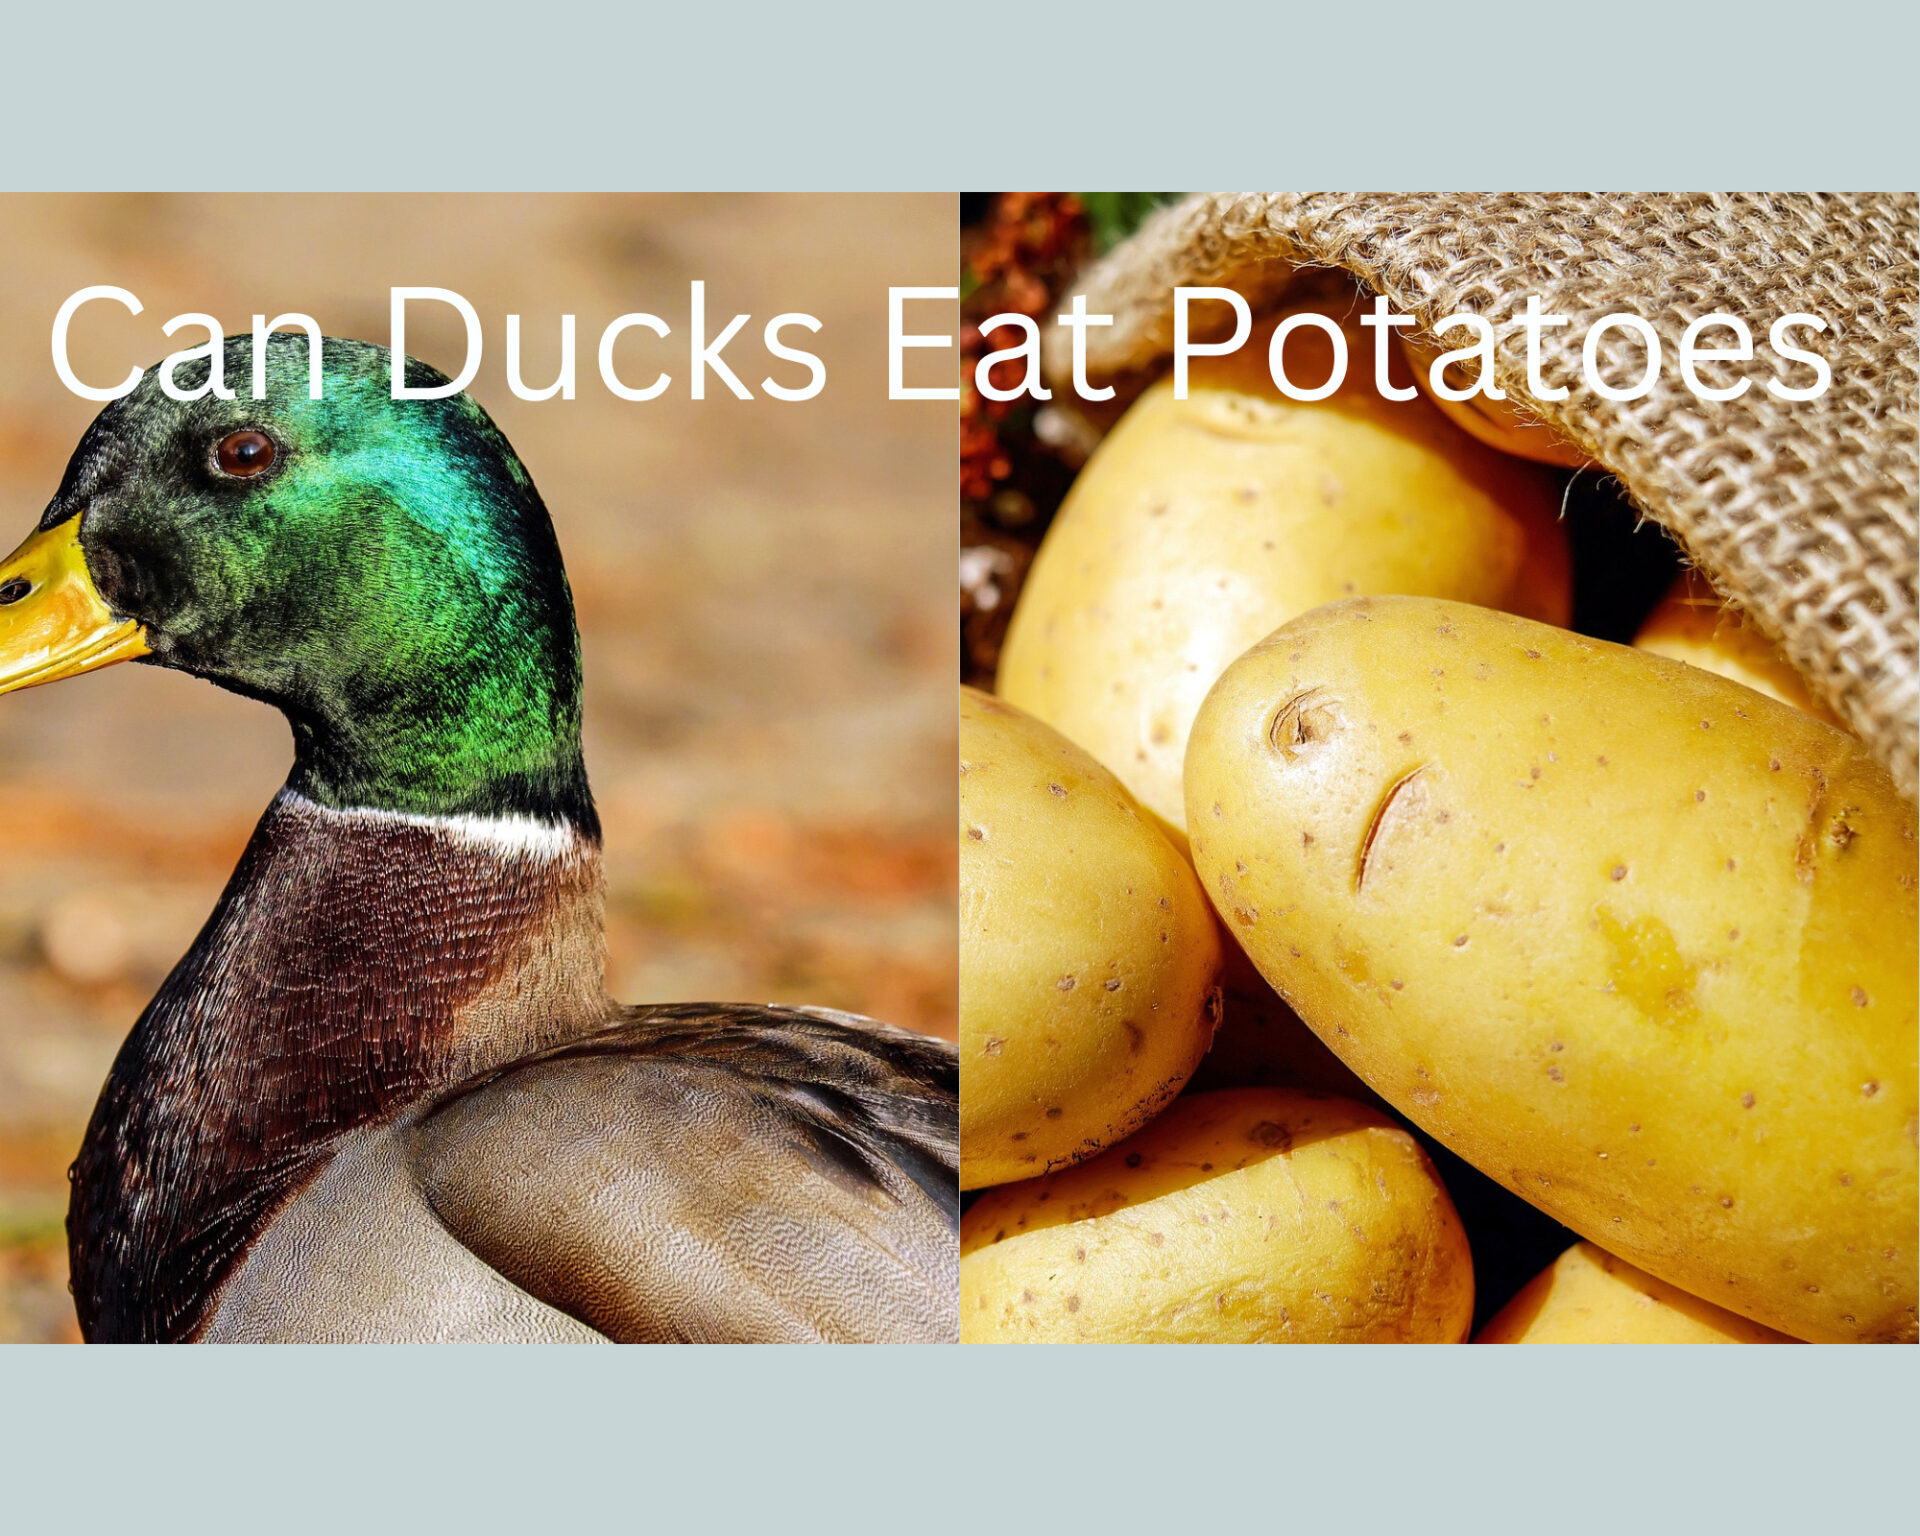 Can Ducks Eat Potatoes?